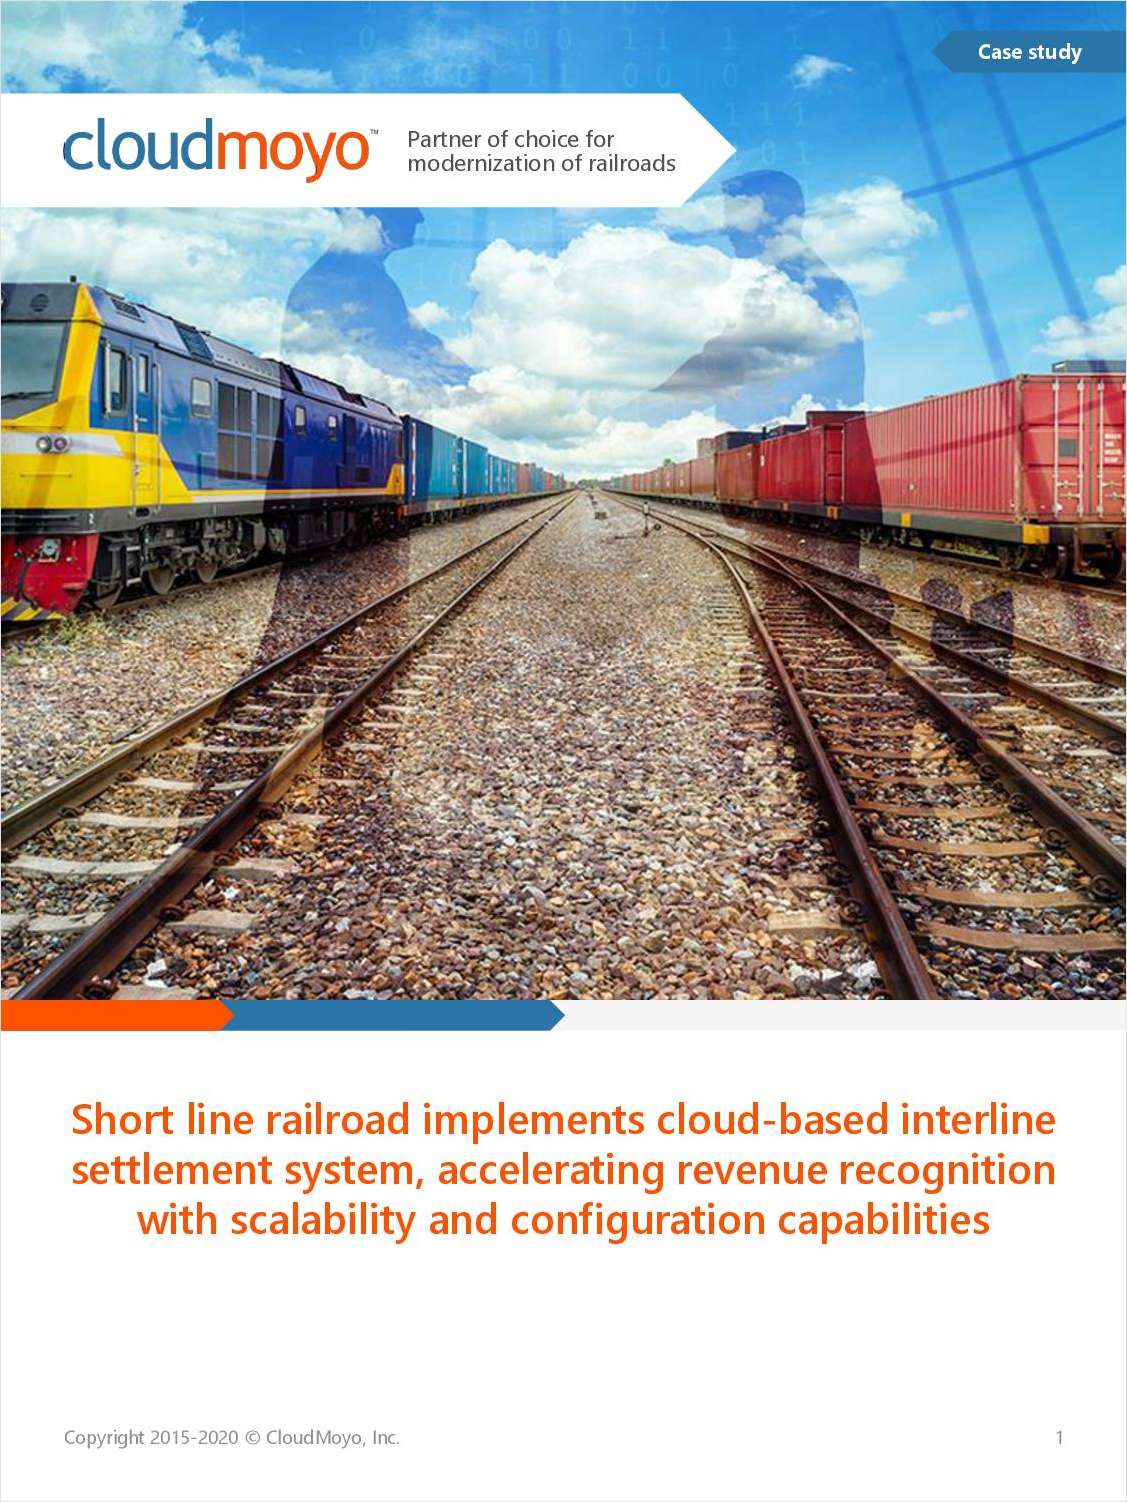 Short Line Railroad Implements Cloud-Based Interline Settlement System